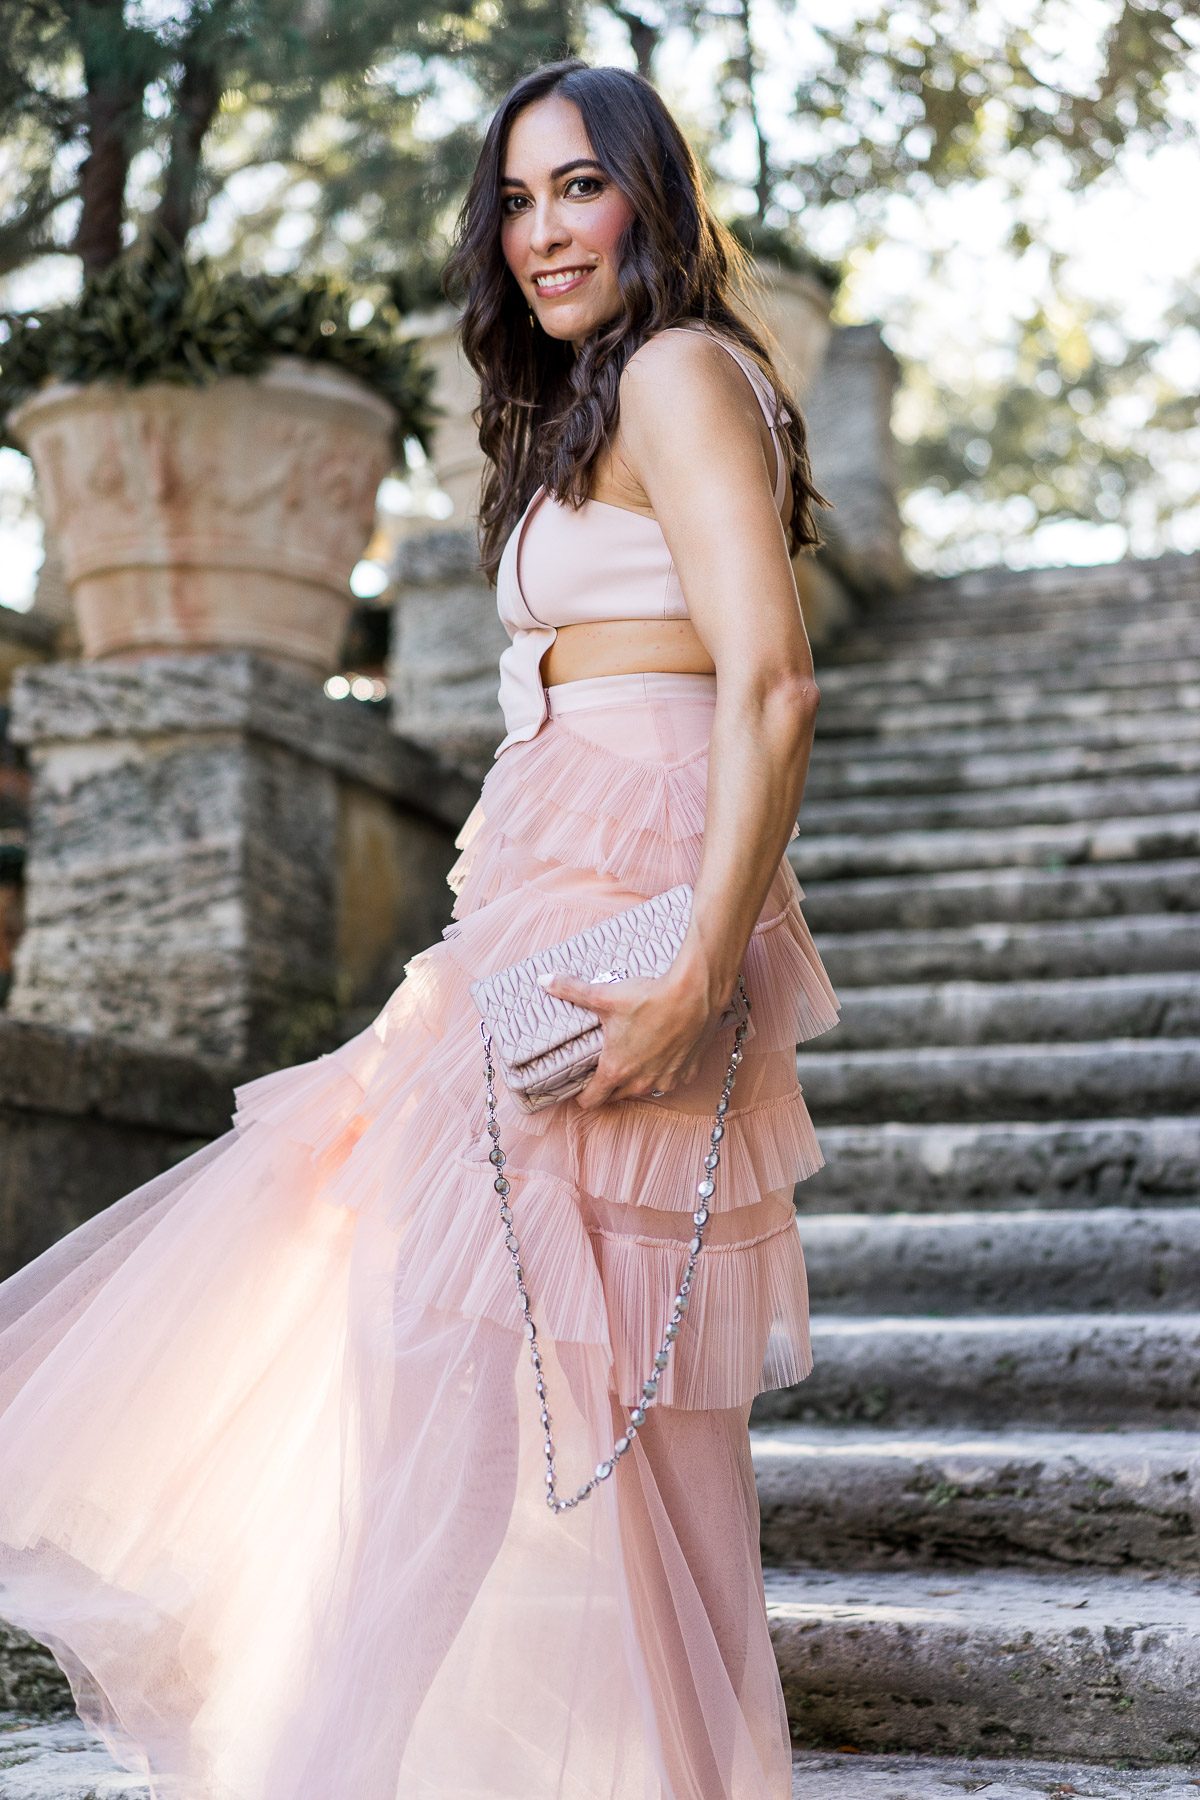 A Glam Lifestyle blogger wears BCBG Avalon blush tulle dress while carrying Miu Miu Nappa Crystal bag at Viscaya Gardens in Miami